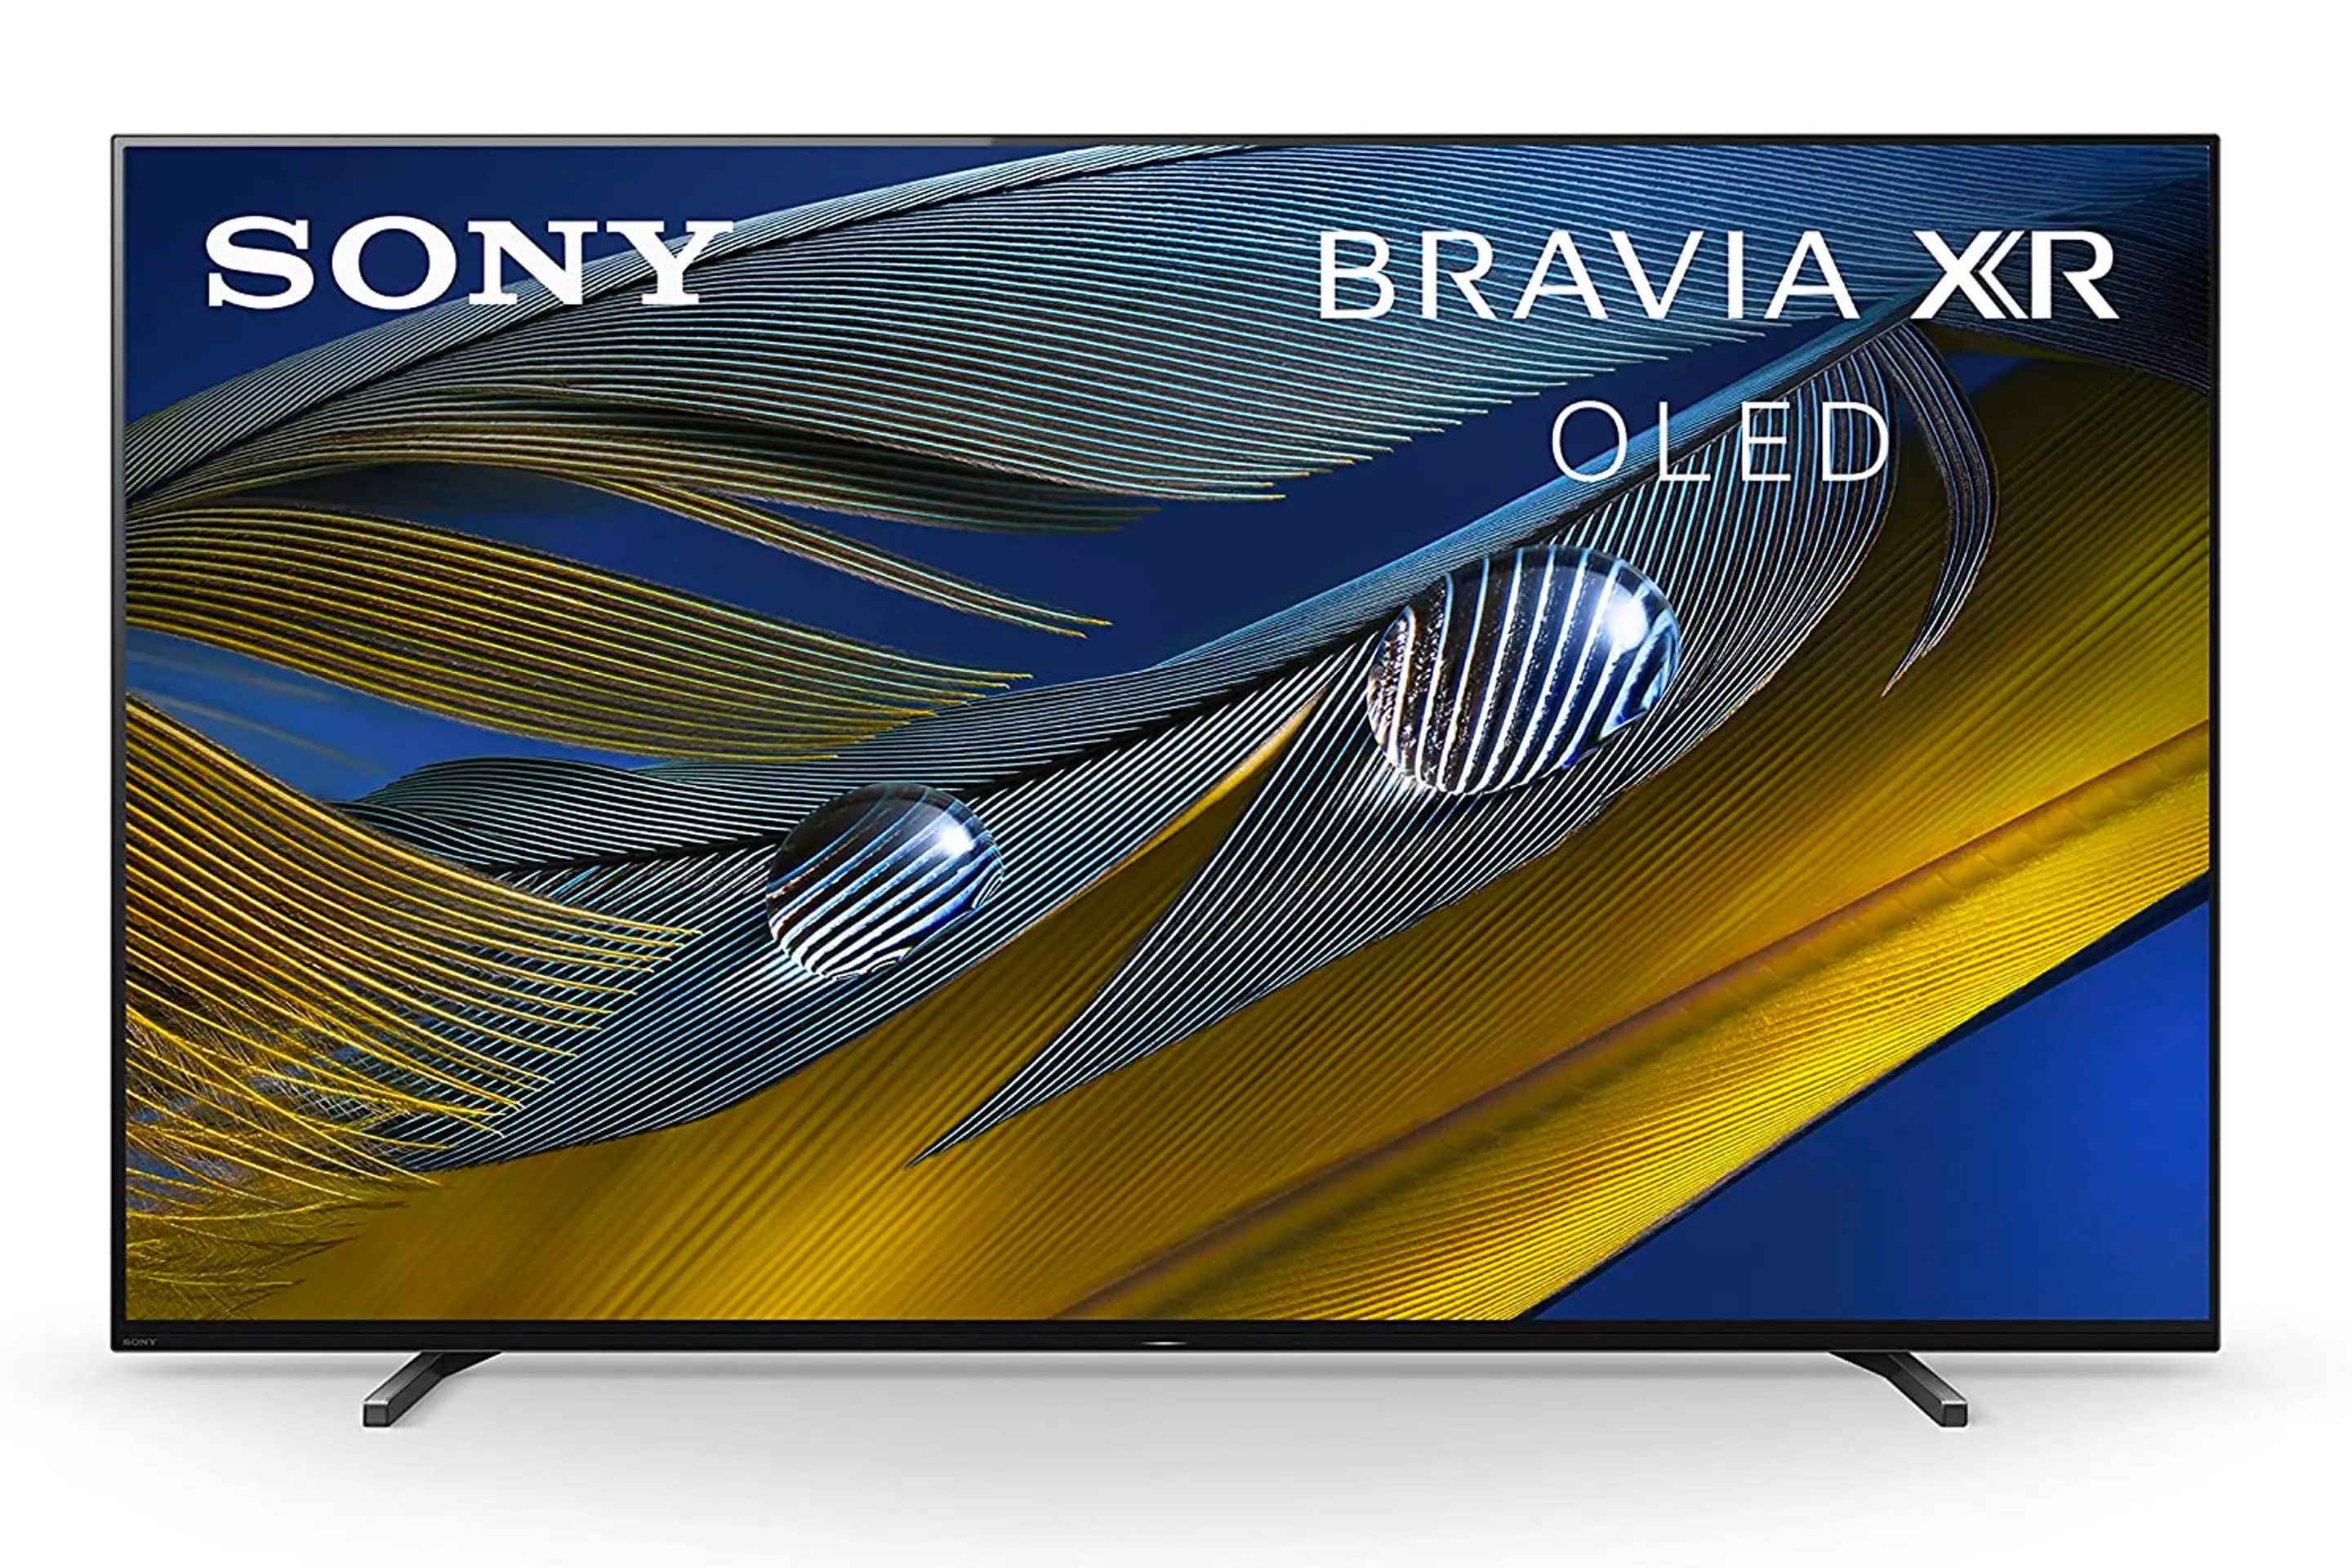 Shopping-Sony A80J Bravia XR 55 OLED 4K Smart TV